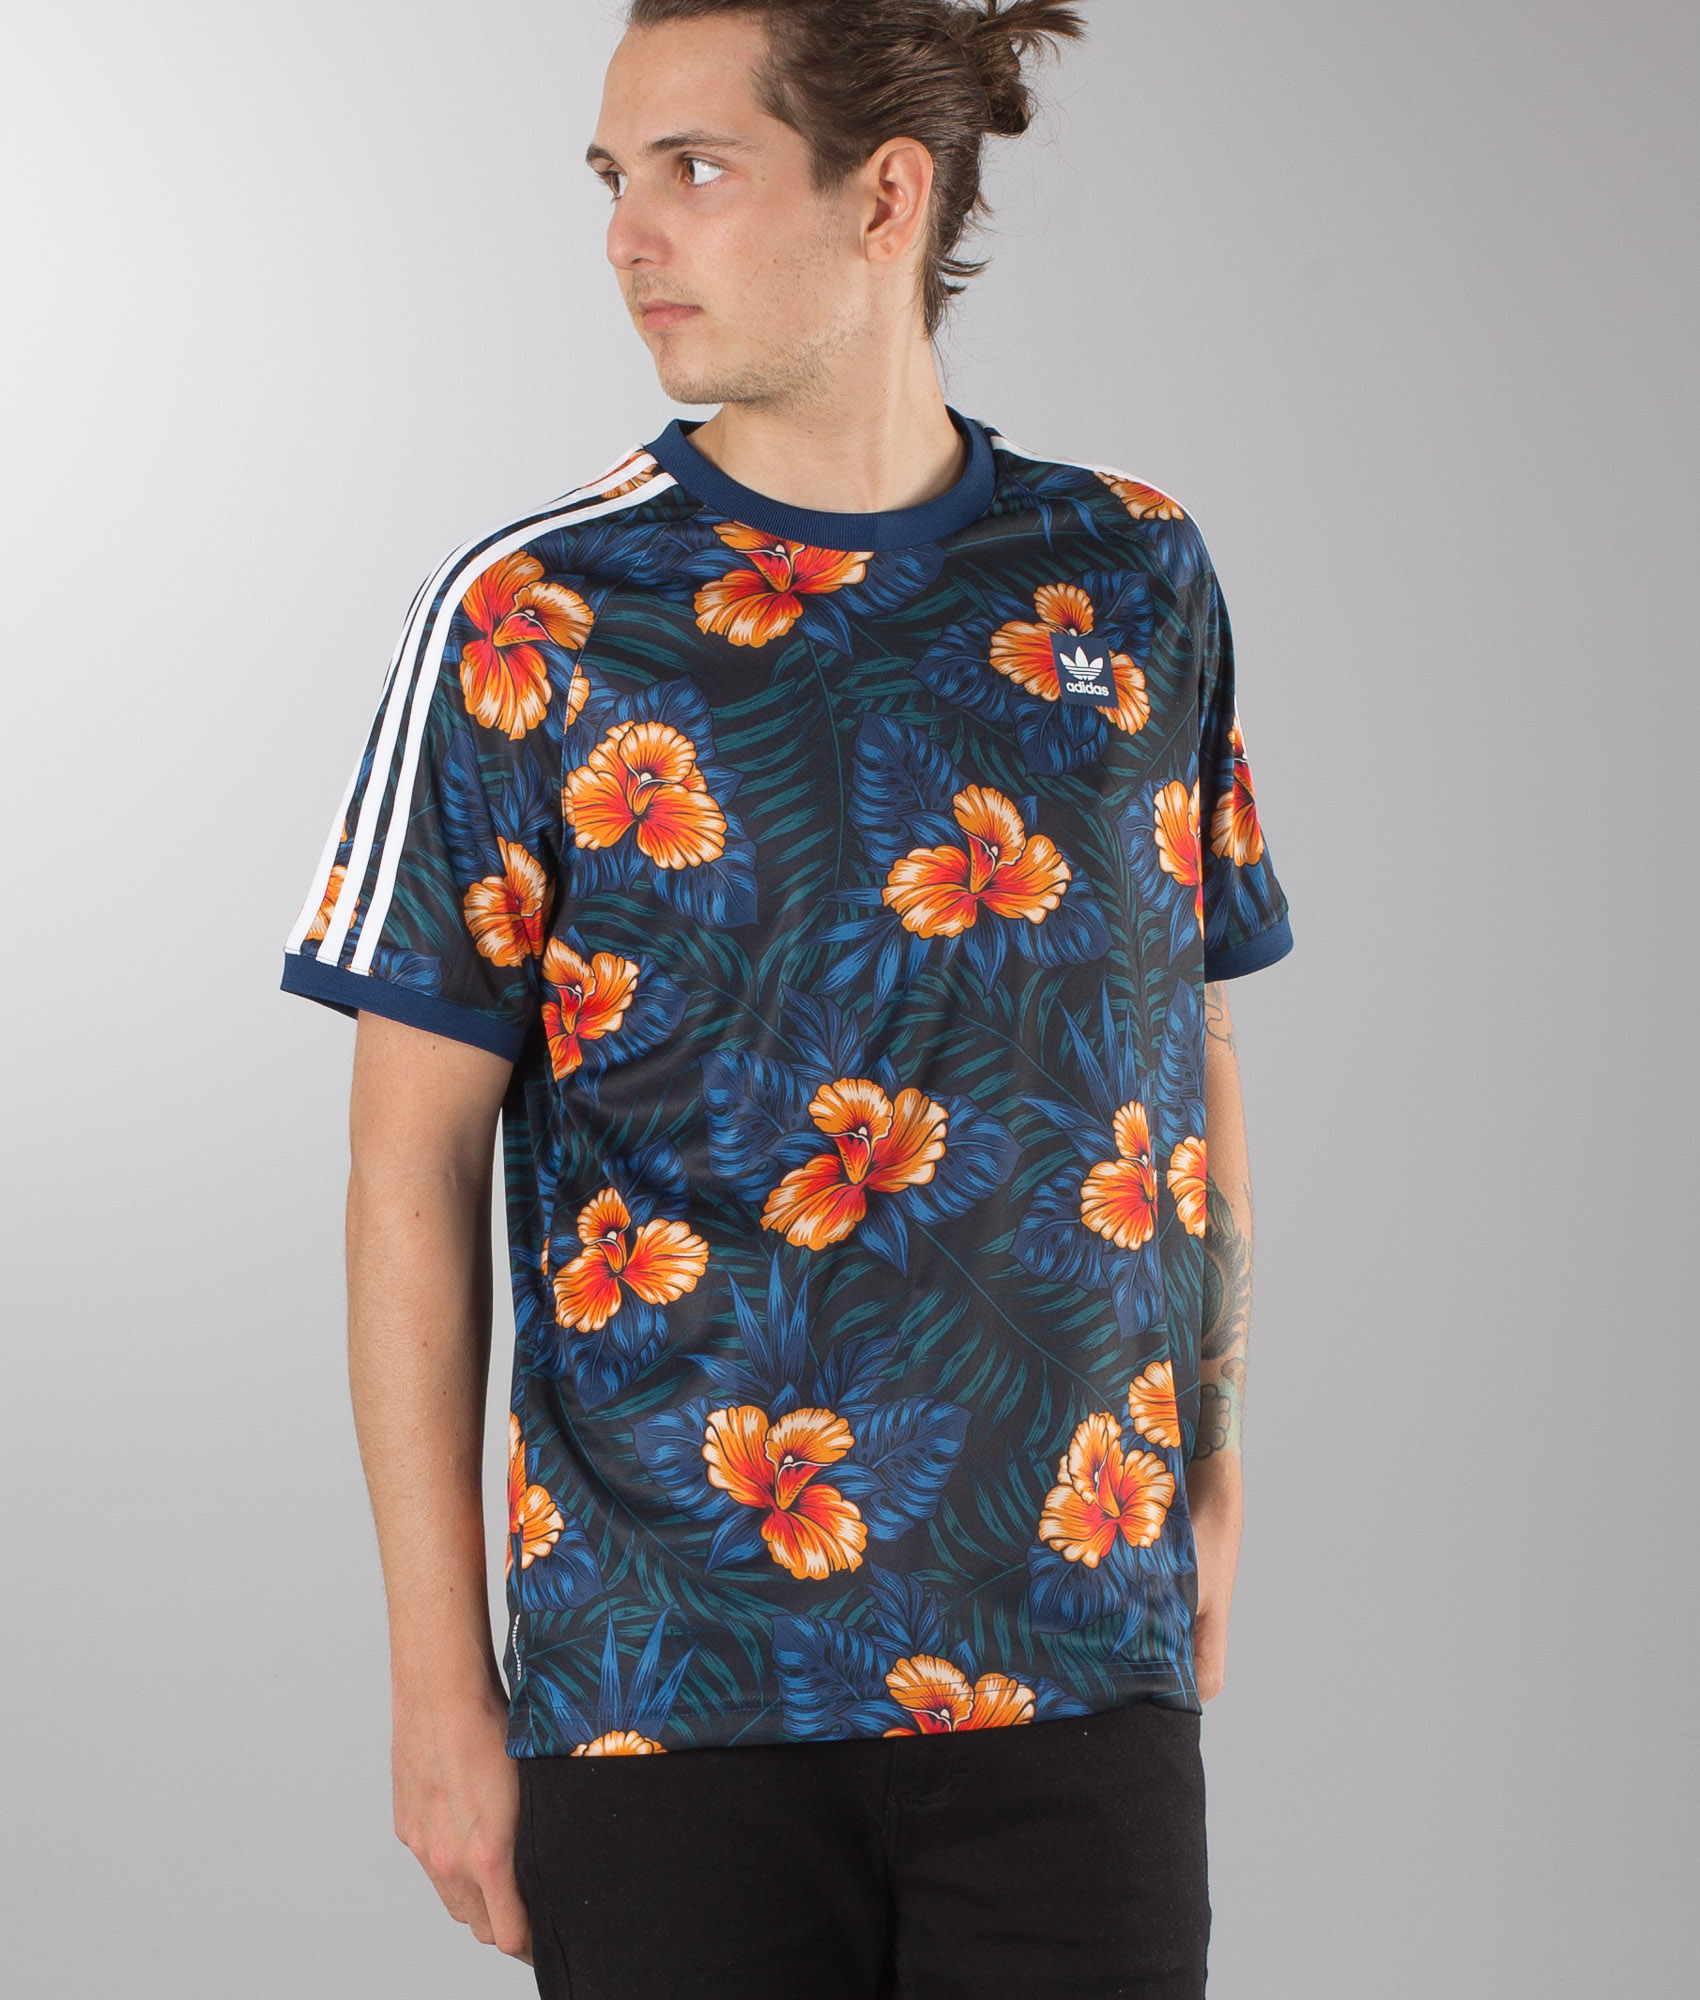 adidas floral shirt